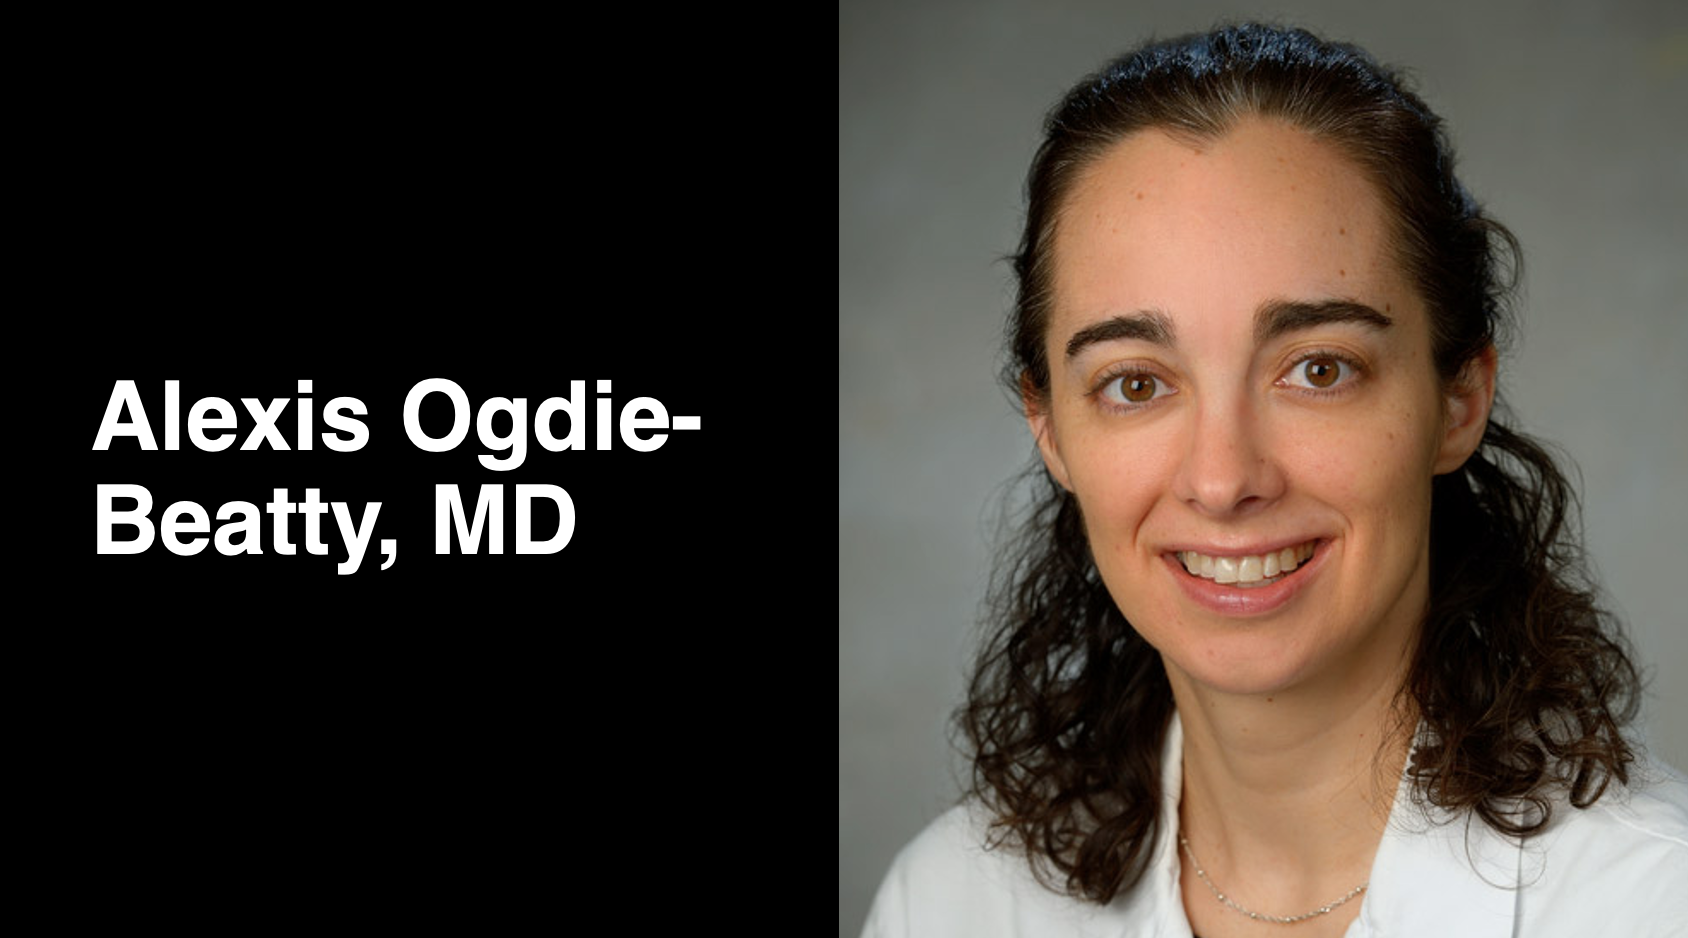 Alexis Ogdie-Beatty, MD: UPLIFT Survey for Psoriatic Arthritis 